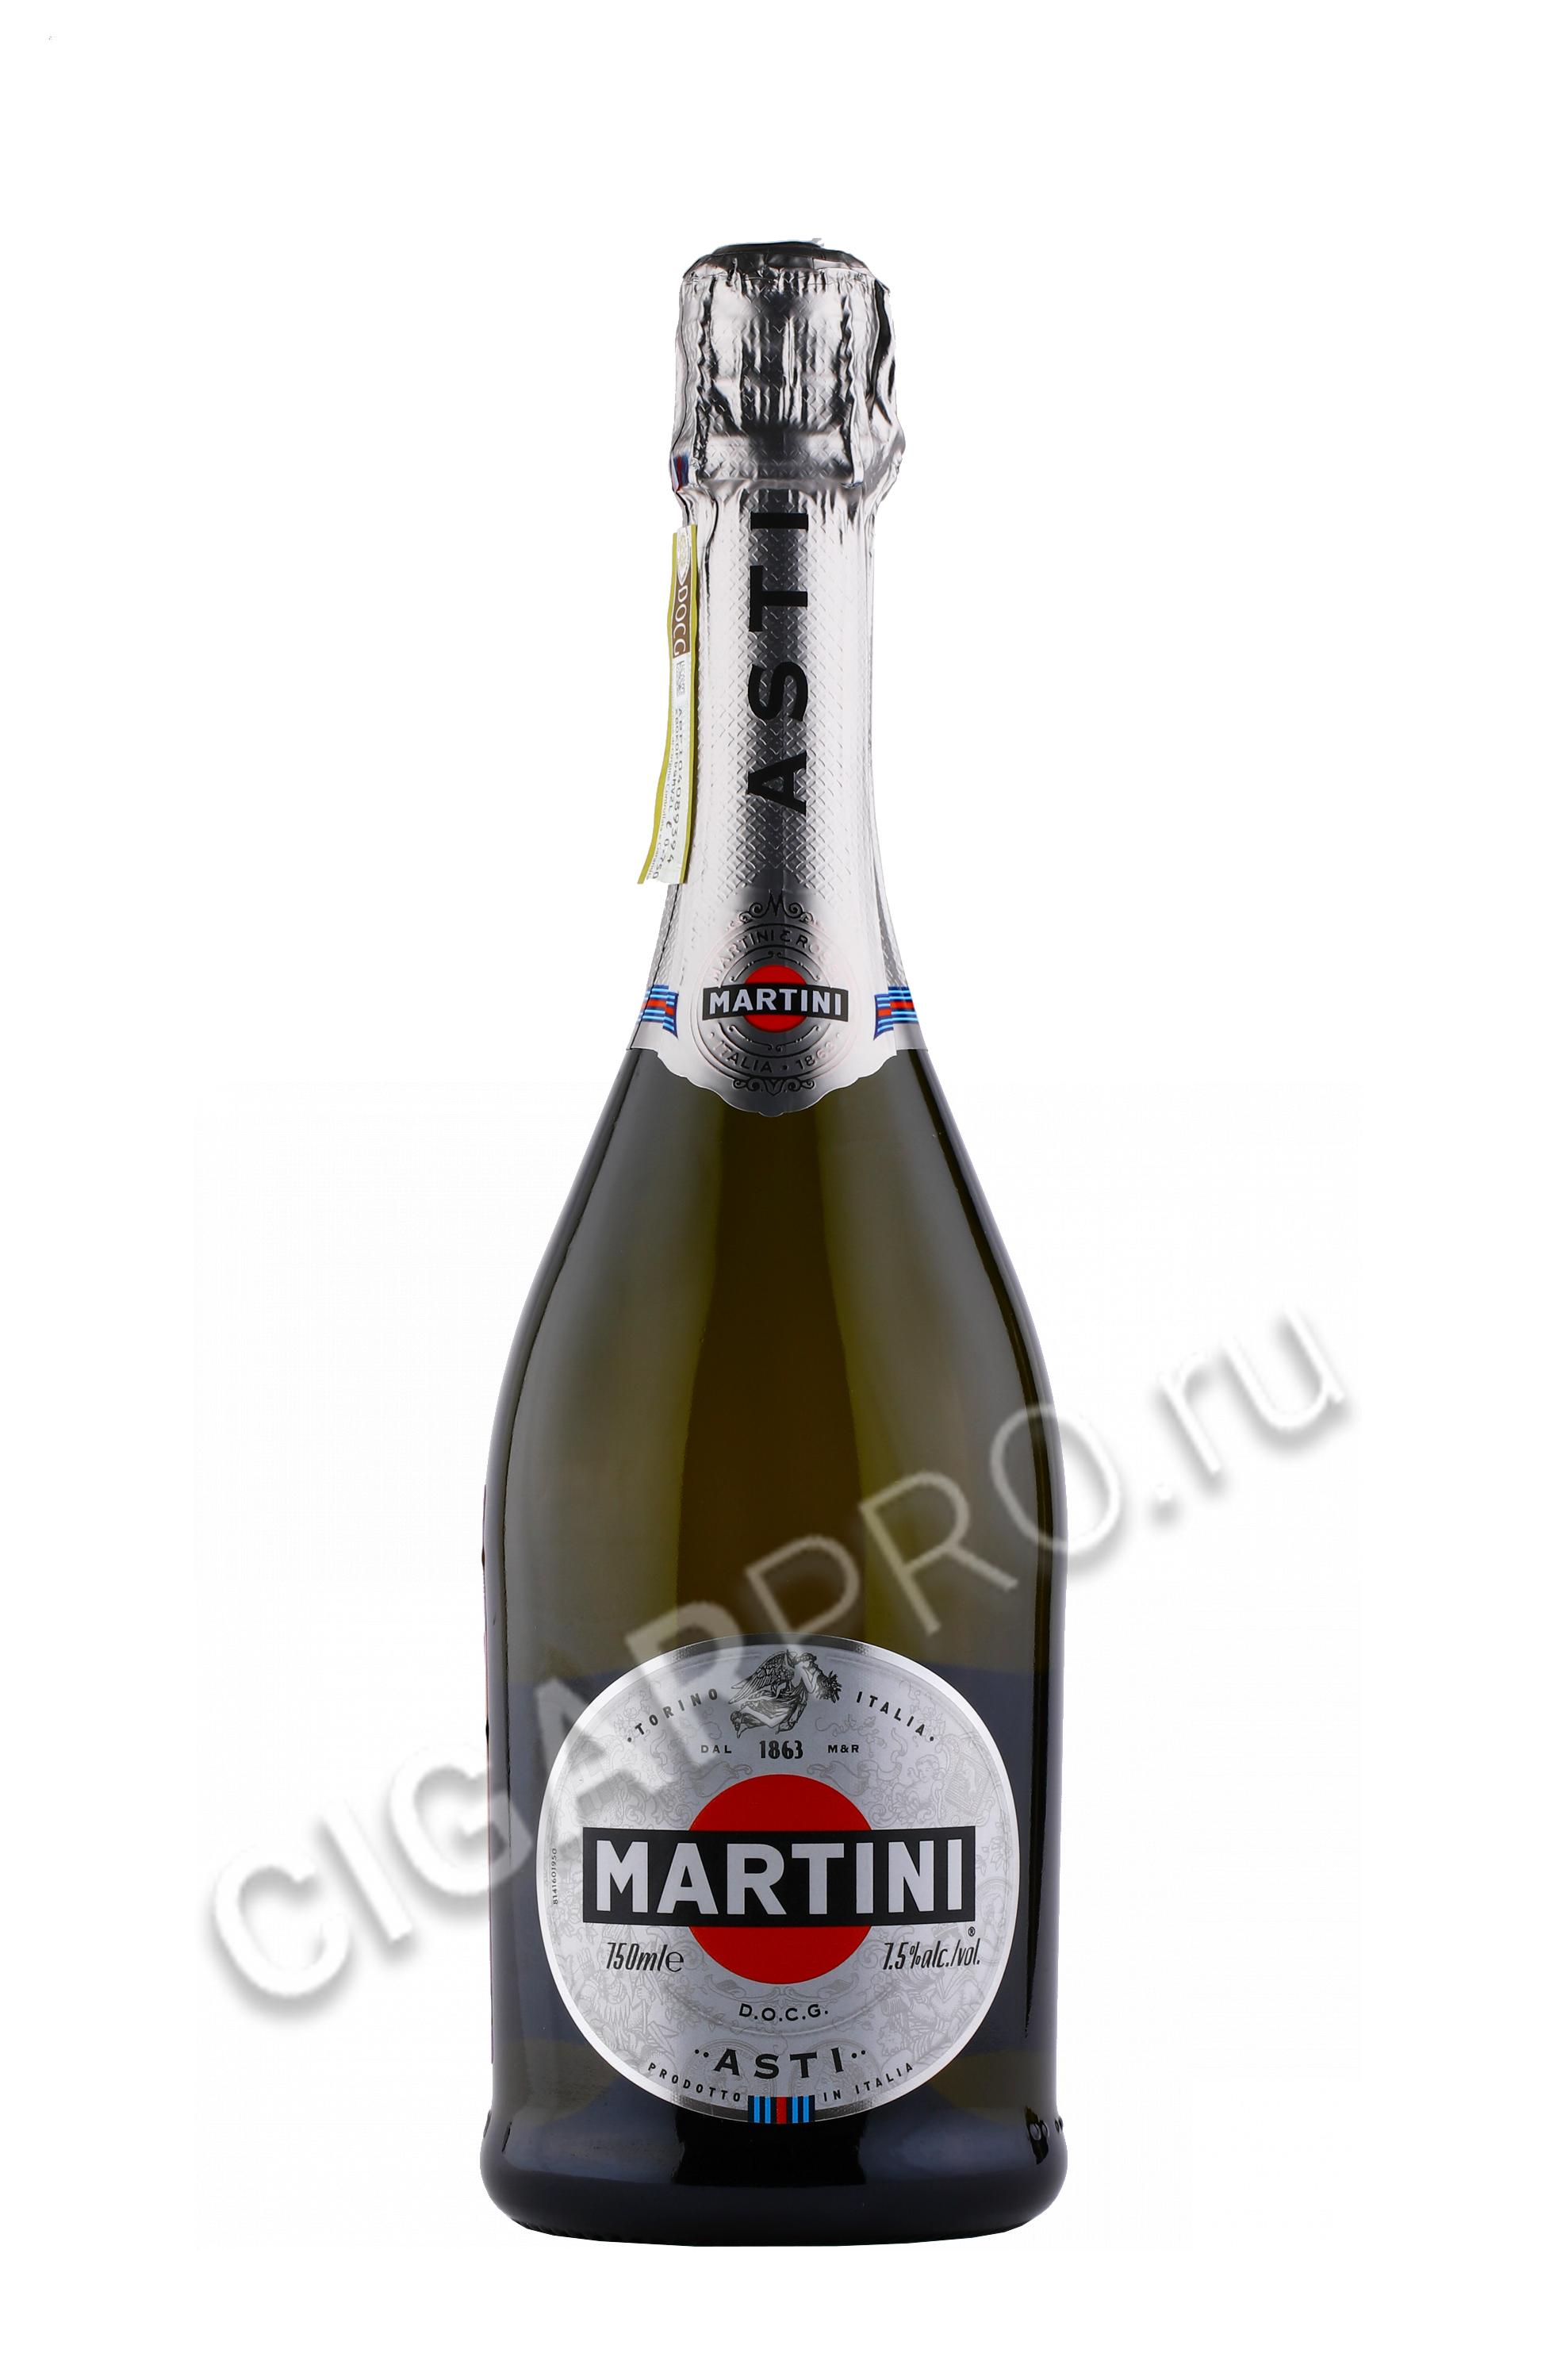 Шампанское асти полусладкое. Шампанское Martini Prosecco. Игристое вино Asti "Martini". Мартини Просекко 187 мл. Мартини Асти DOCG.